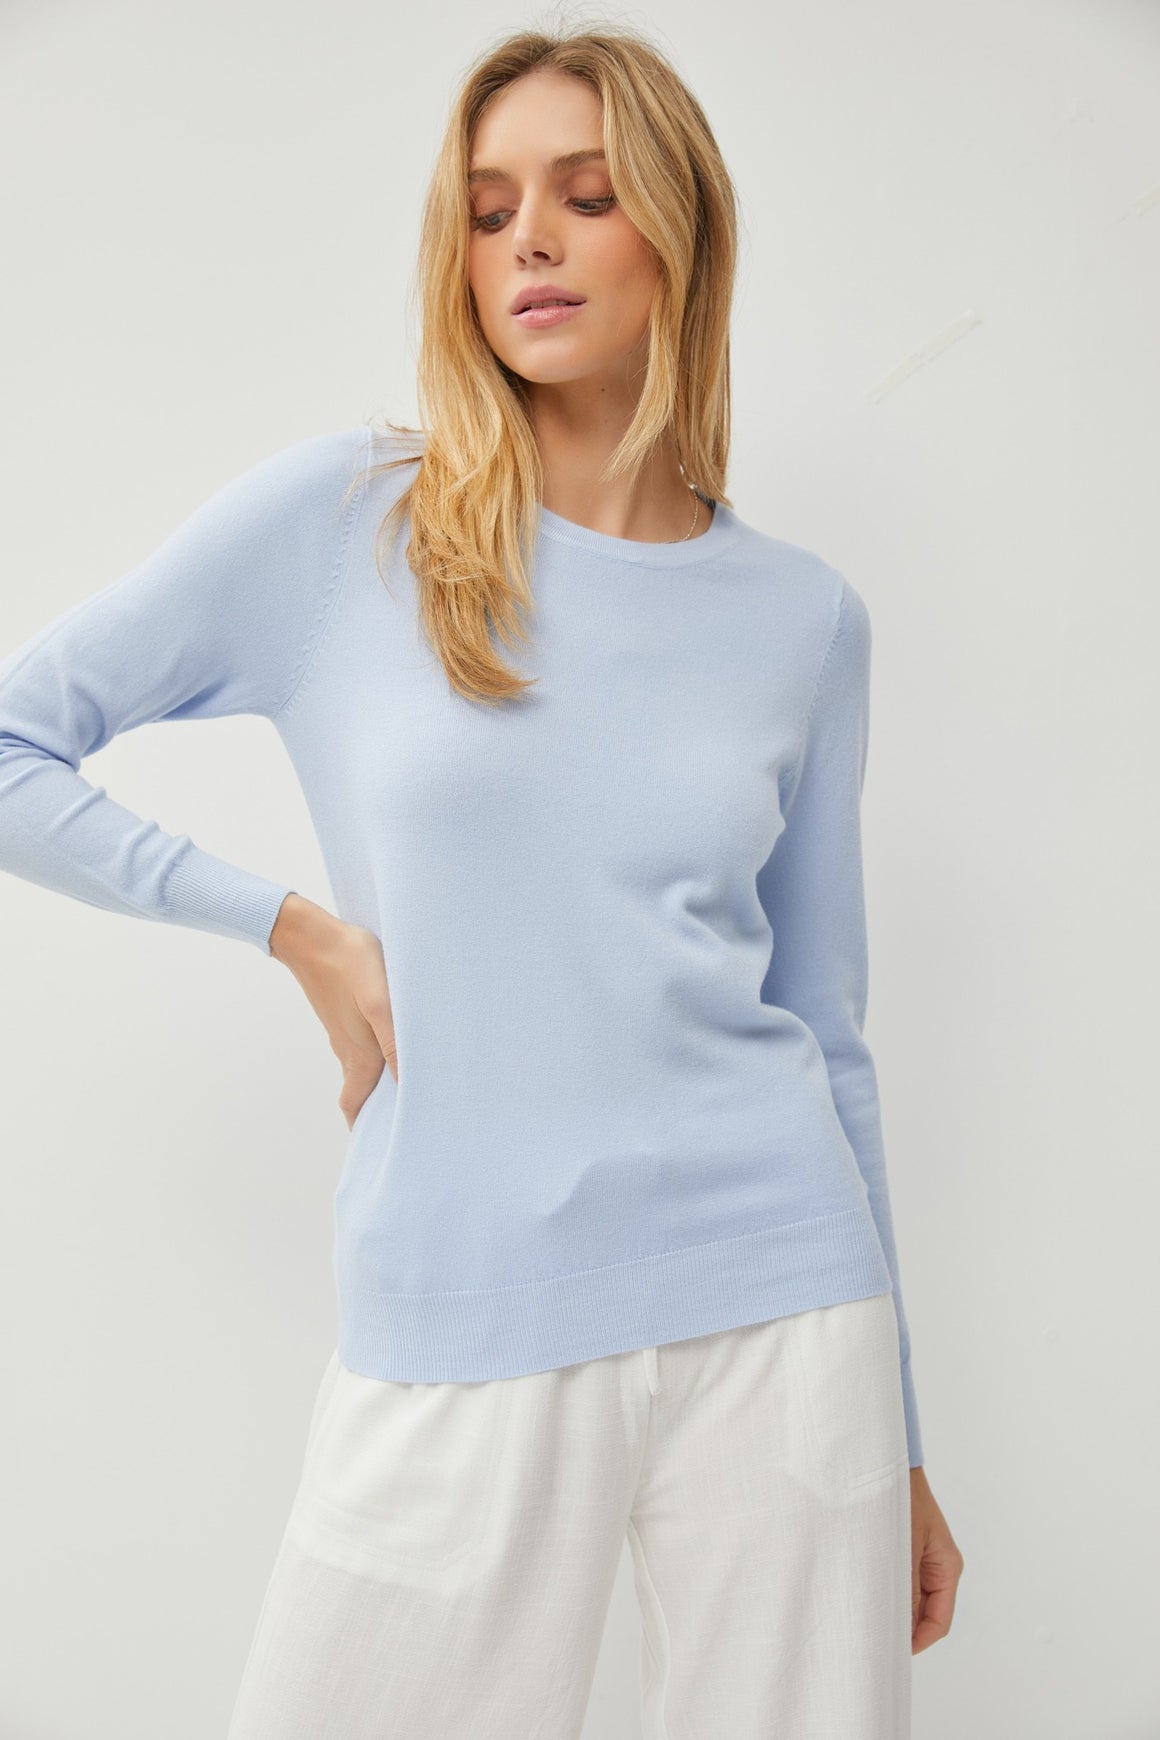 Lotfia Classic Sweater- 3 Colors!.